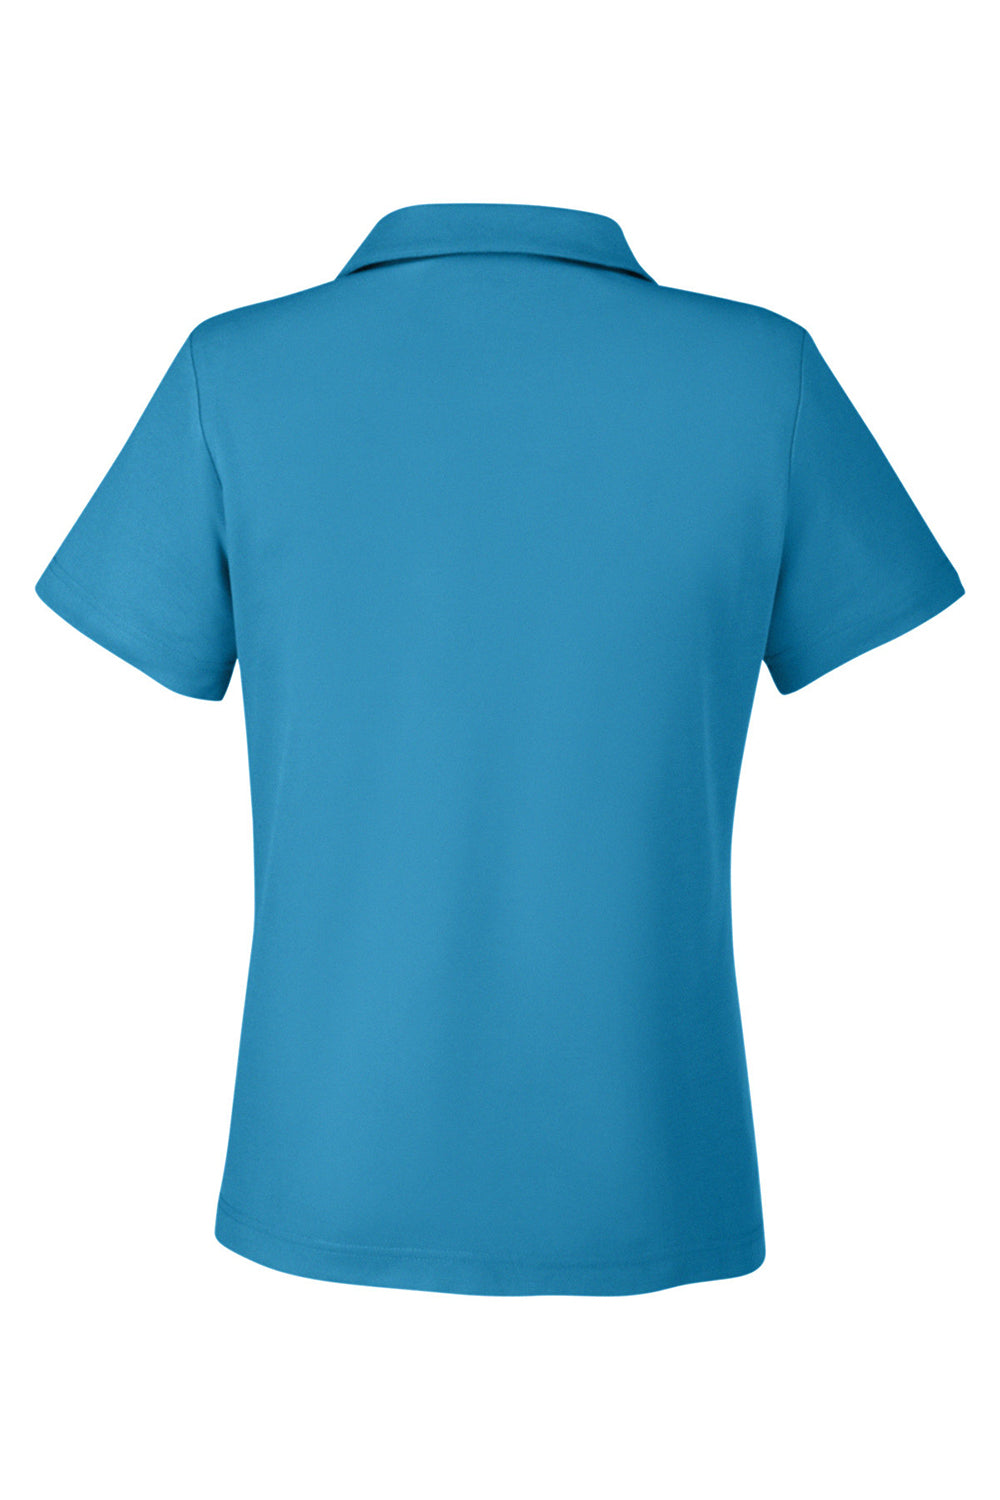 Core 365 CE112W Womens Fusion ChromaSoft Performance Moisture Wicking Pique Short Sleeve Polo Shirt Electric Blue Flat Back